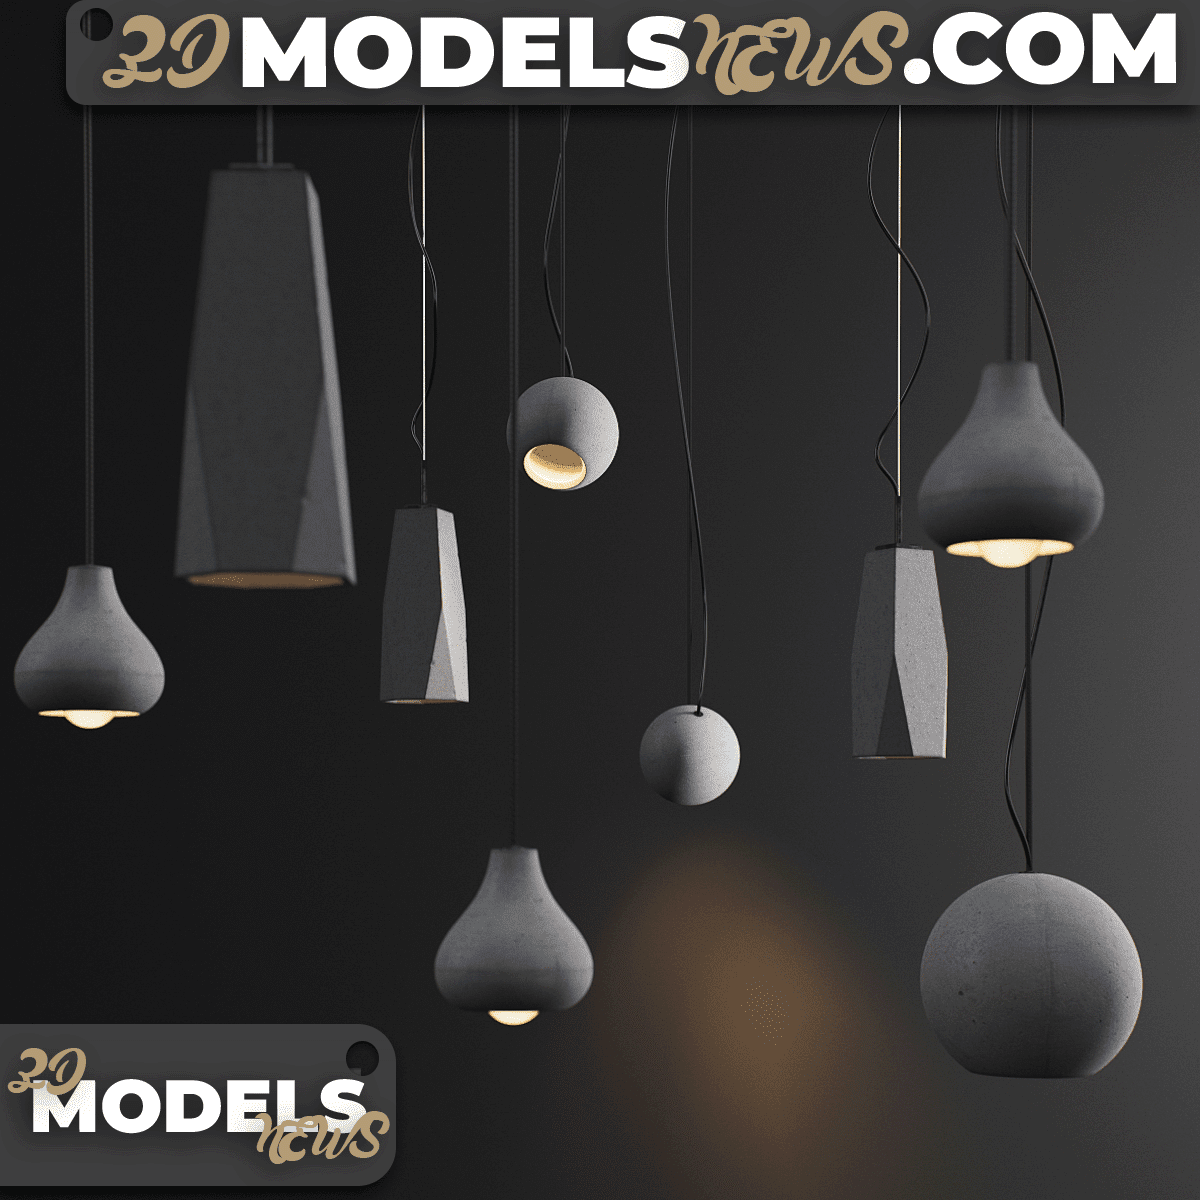 Pendant light Models A set of Fixtures Garage Factory 1